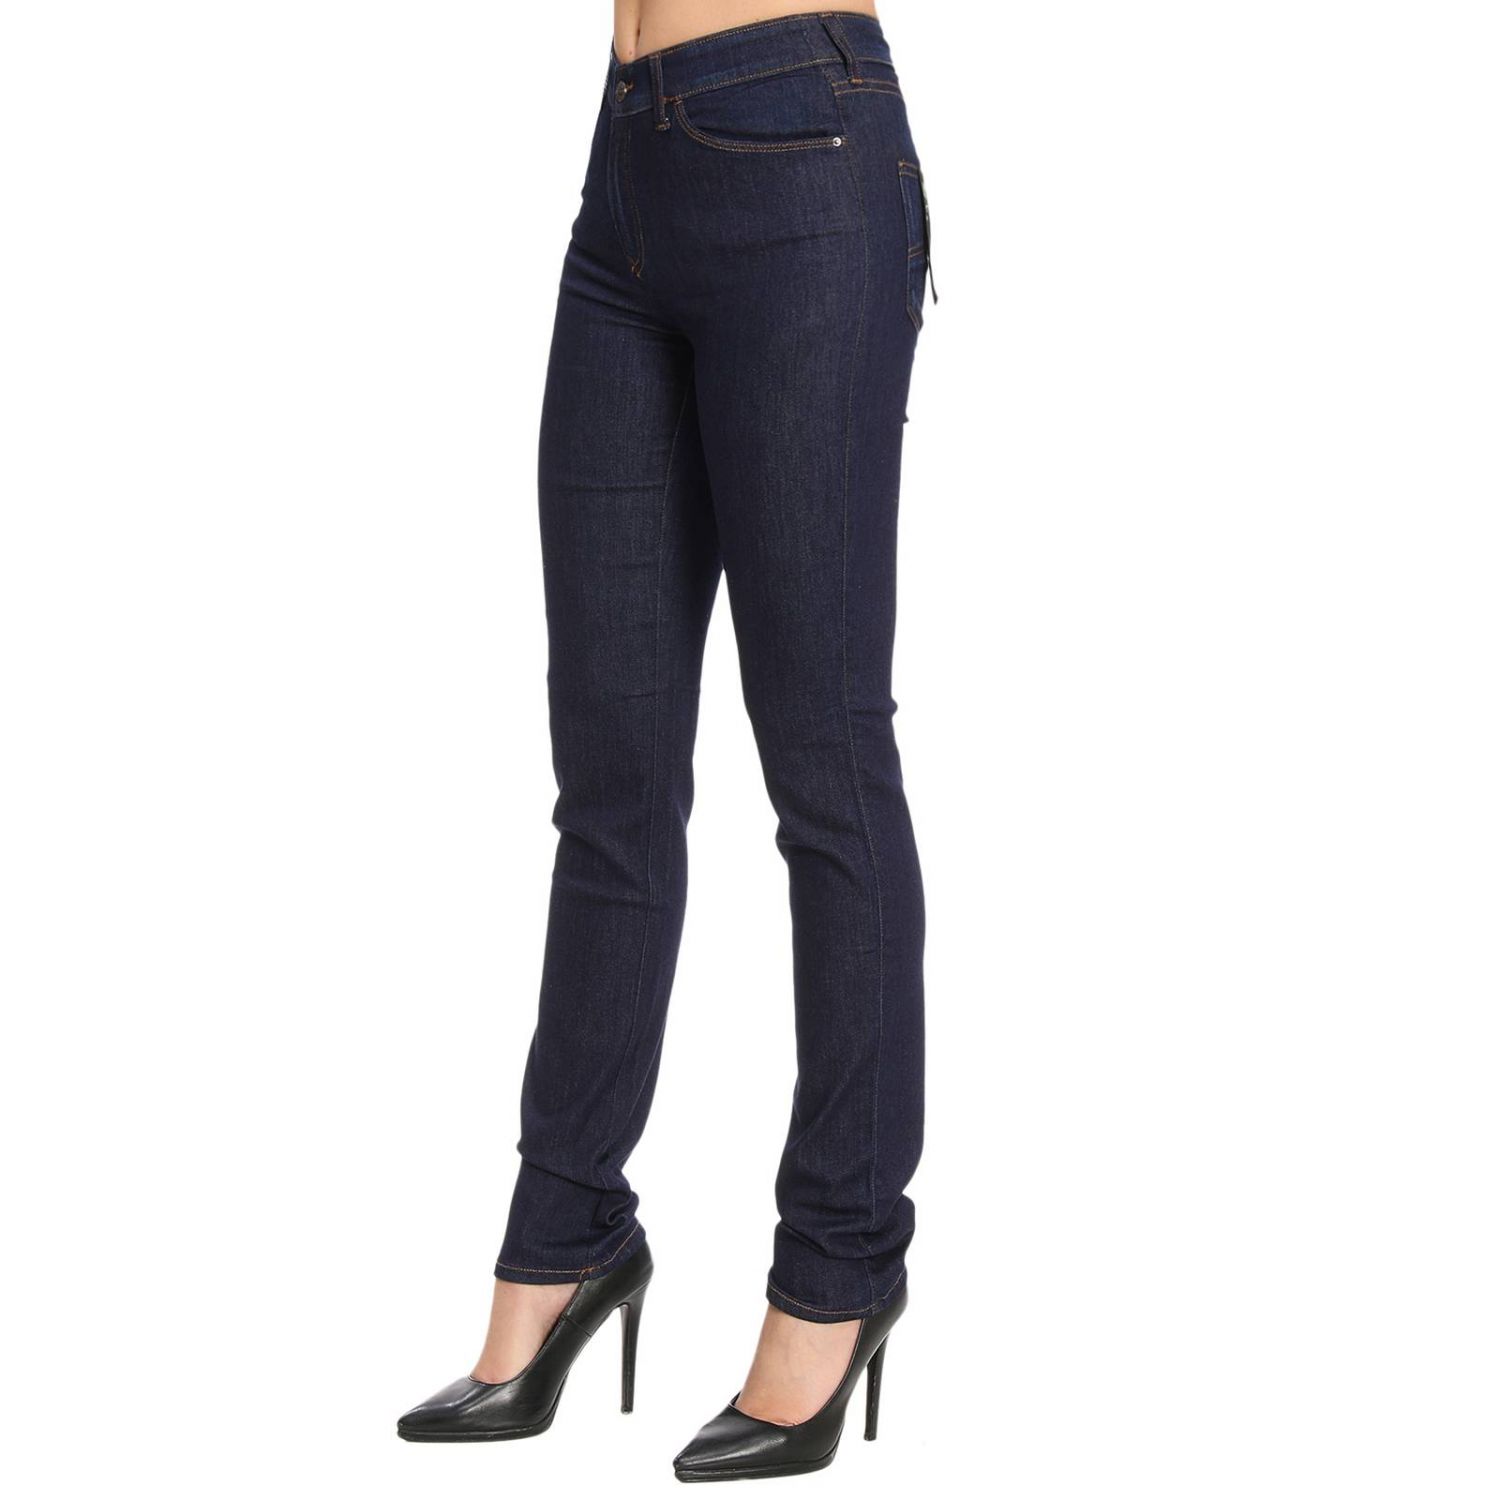 Emporio Armani Outlet: Jeans women | Jeans Emporio Armani Women Gnawed